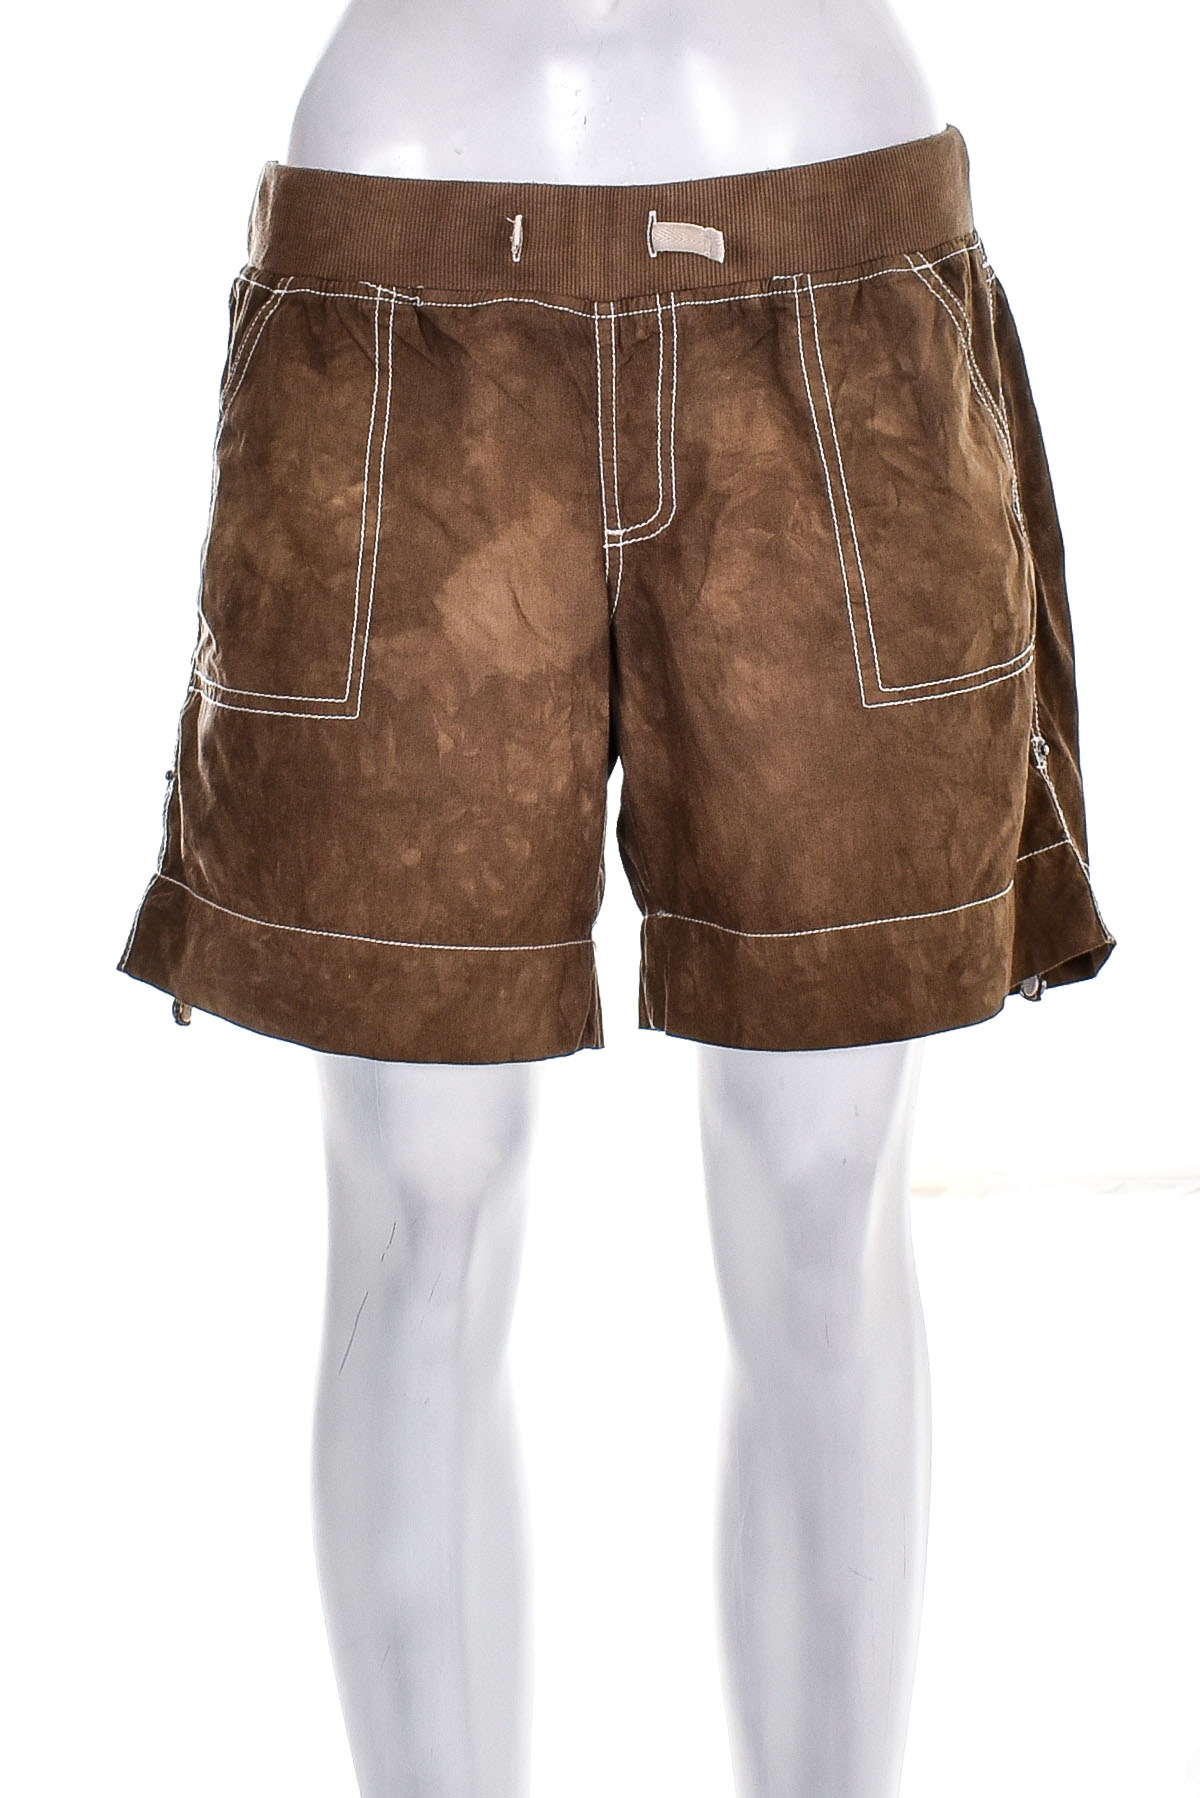 Female shorts - Takko Fashion - 0